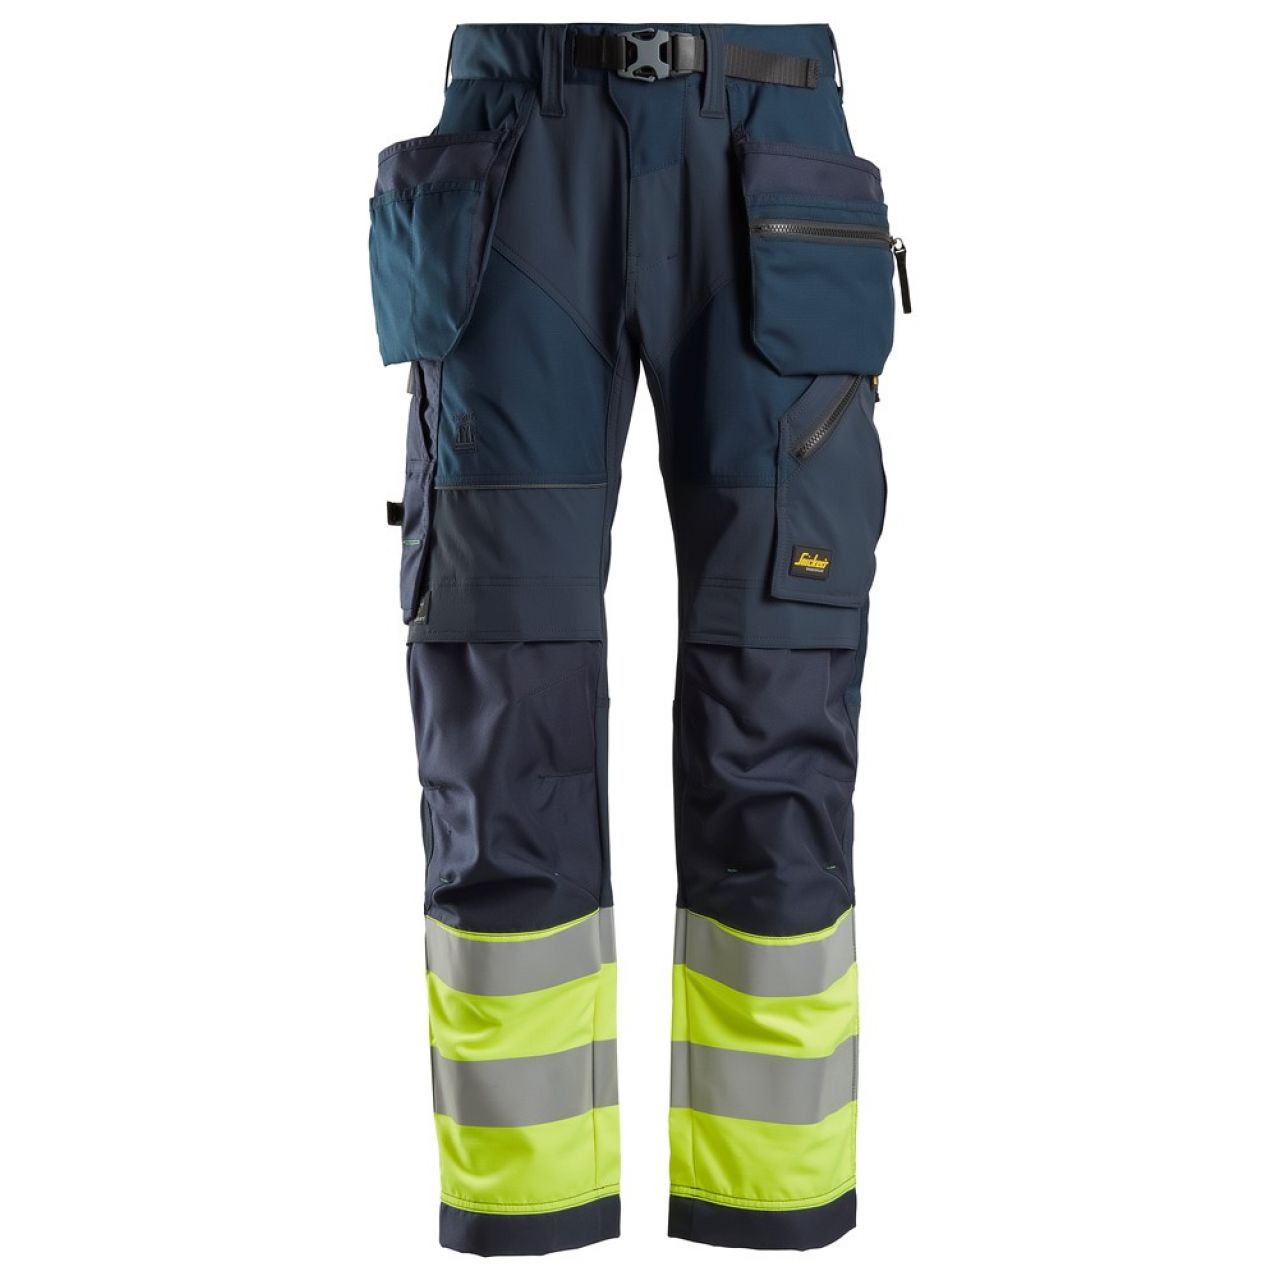 6931 Pantalones largos de trabajo de alta visibilidad clase 1 con bolsillos flotantes FlexiWork azul marino-amarillo talla 256